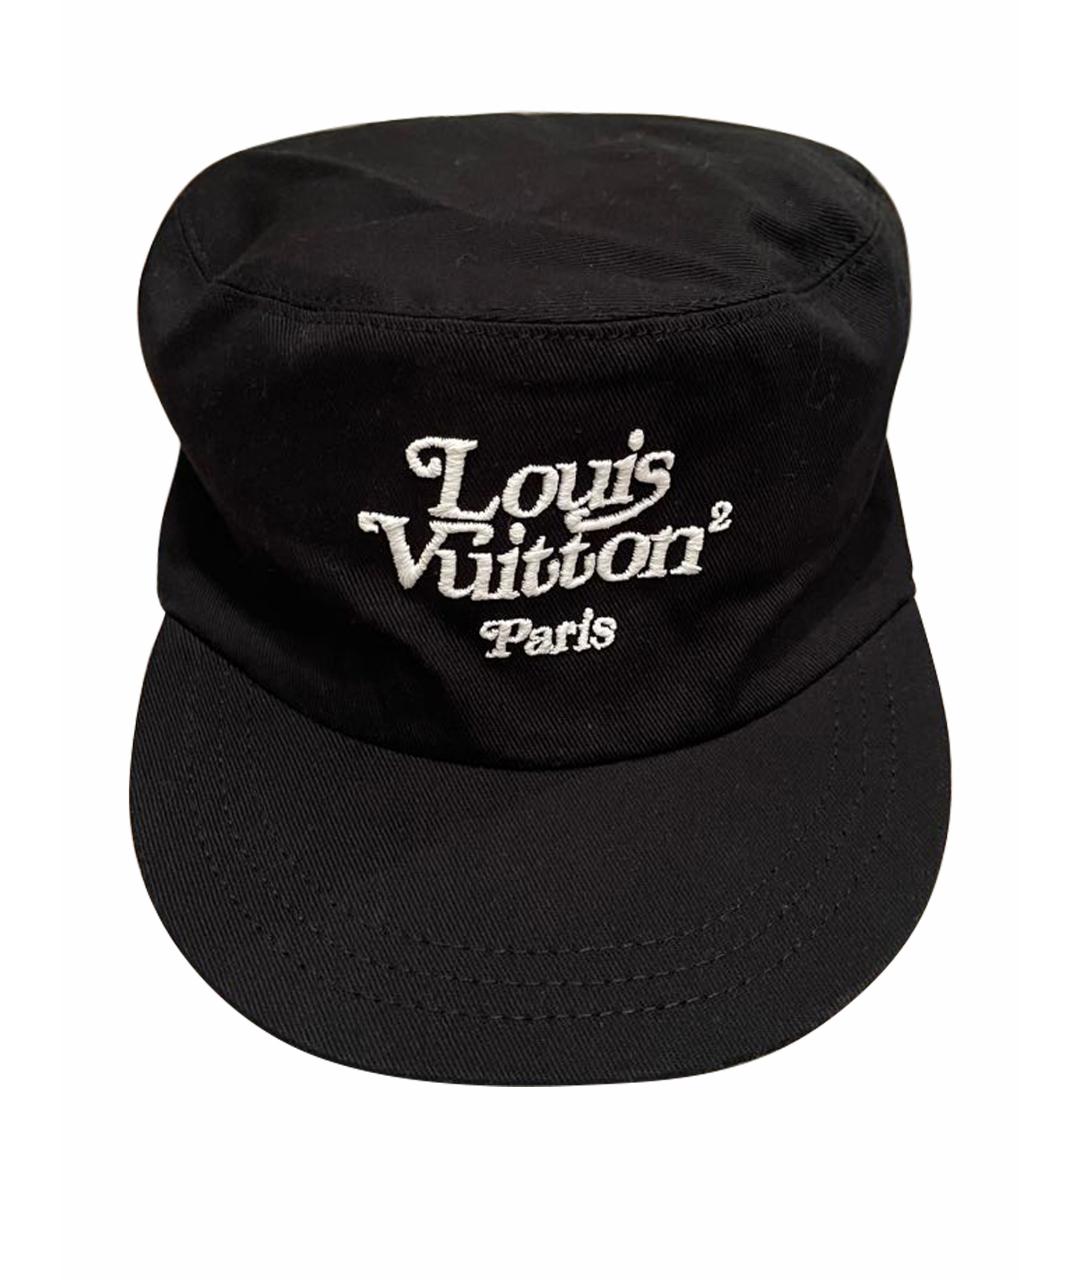 LOUIS VUITTON PRE-OWNED Черная хлопковая кепка/бейсболка, фото 1